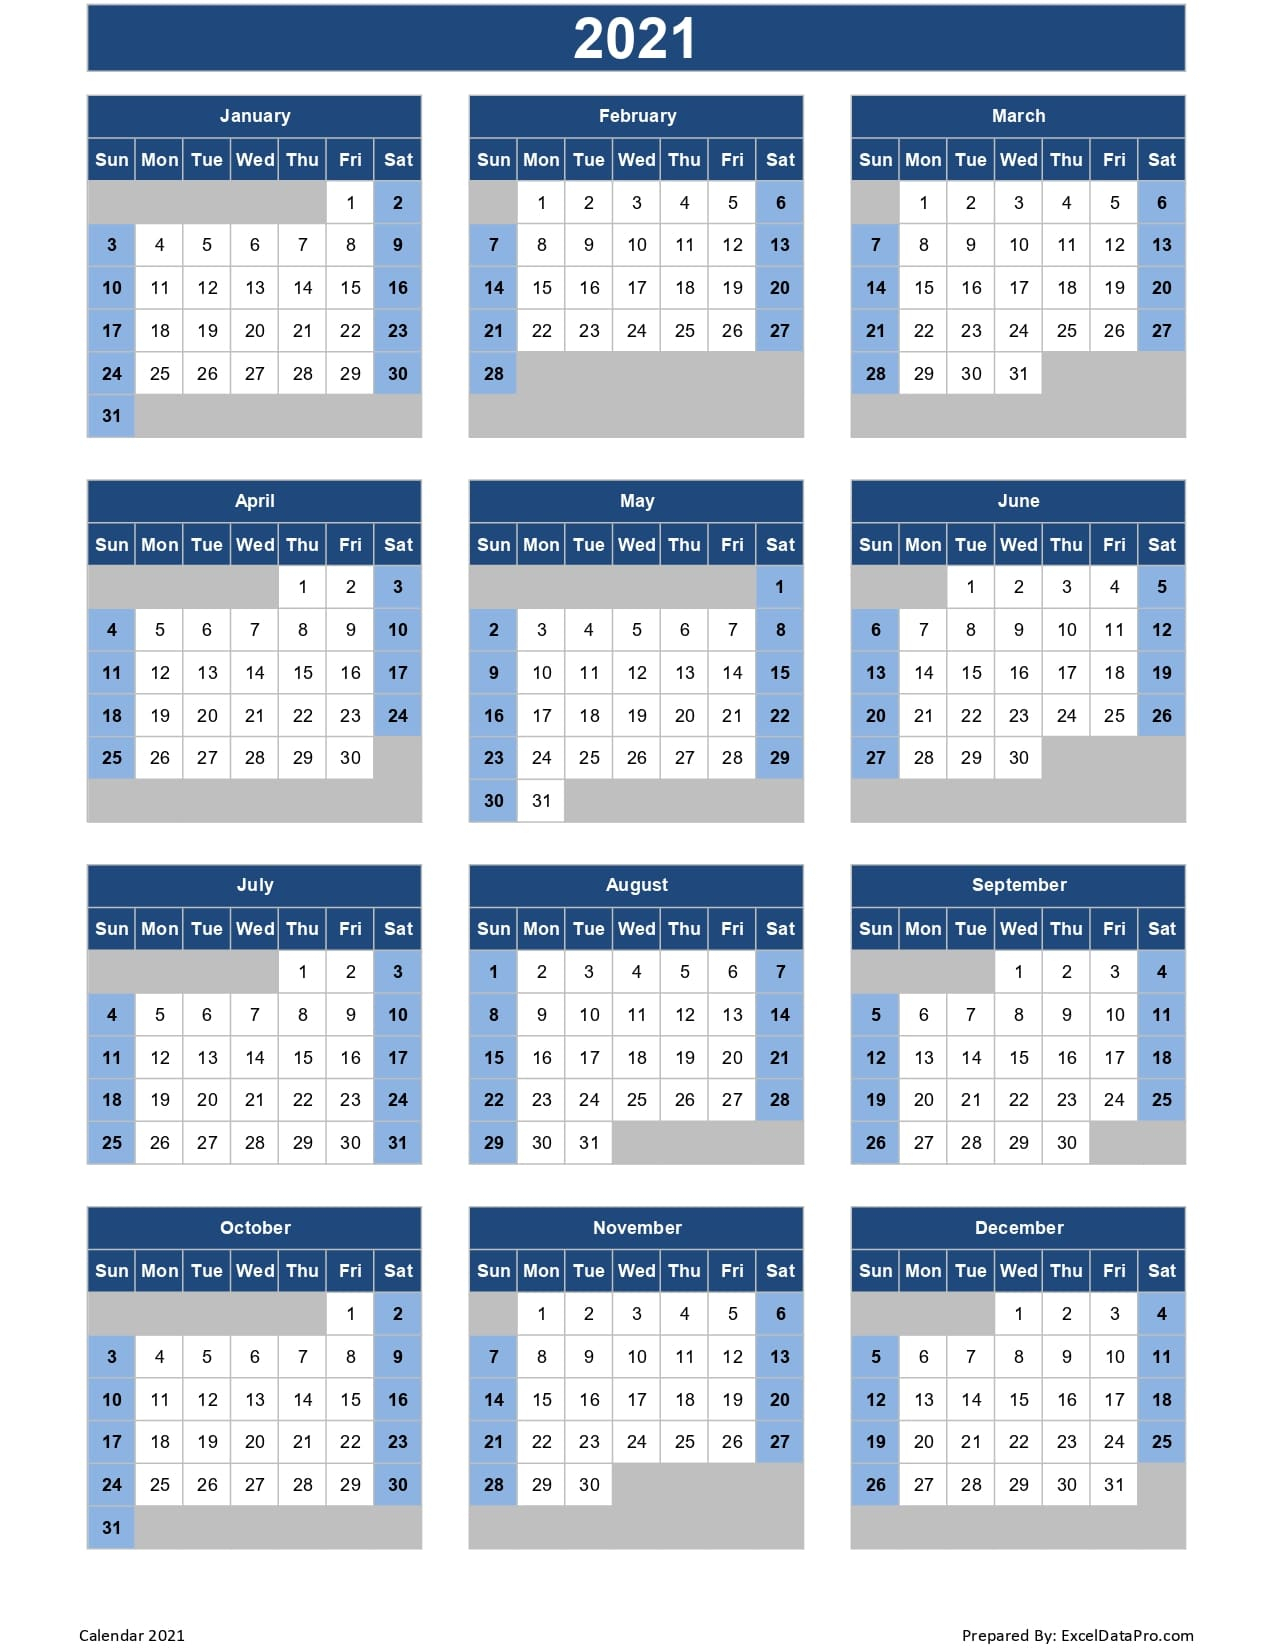 Julian Calendar 2021 Excel | Free Printable Calendar